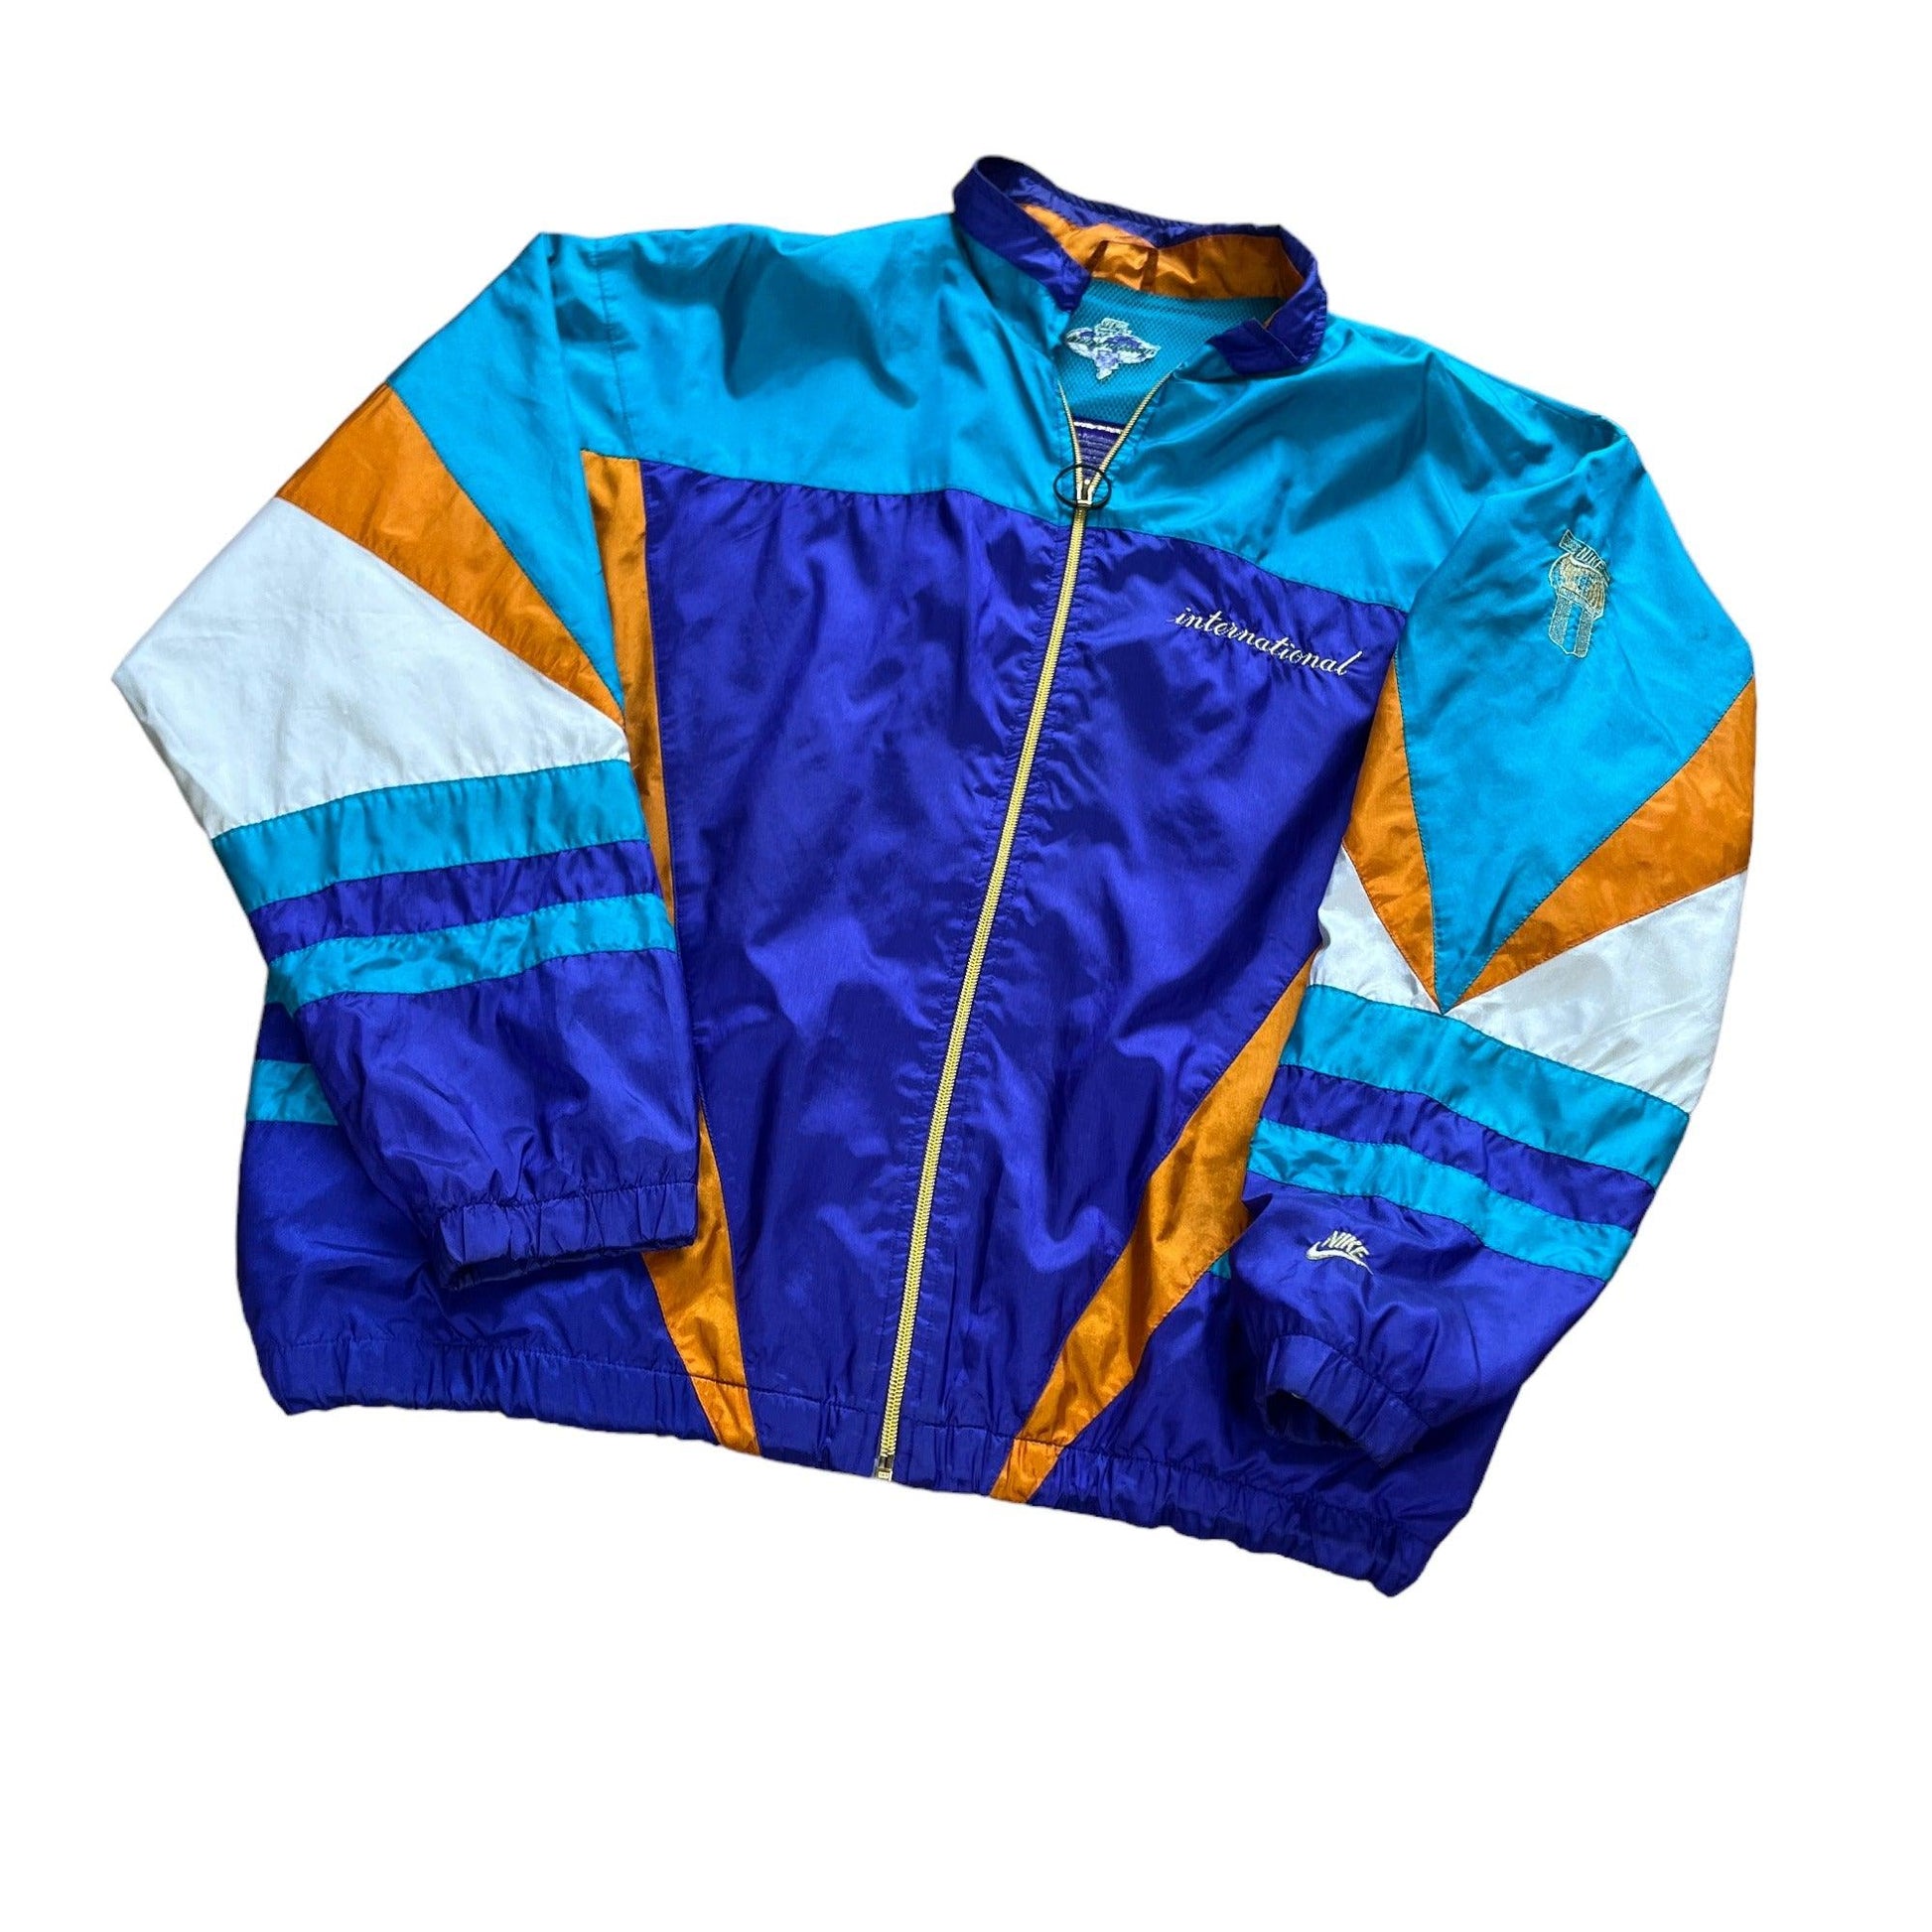 Vintage 90s Blue/ Green, Purple, White + Orange Nike International Windbreaker Jacket - Extra Large - The Streetwear Studio